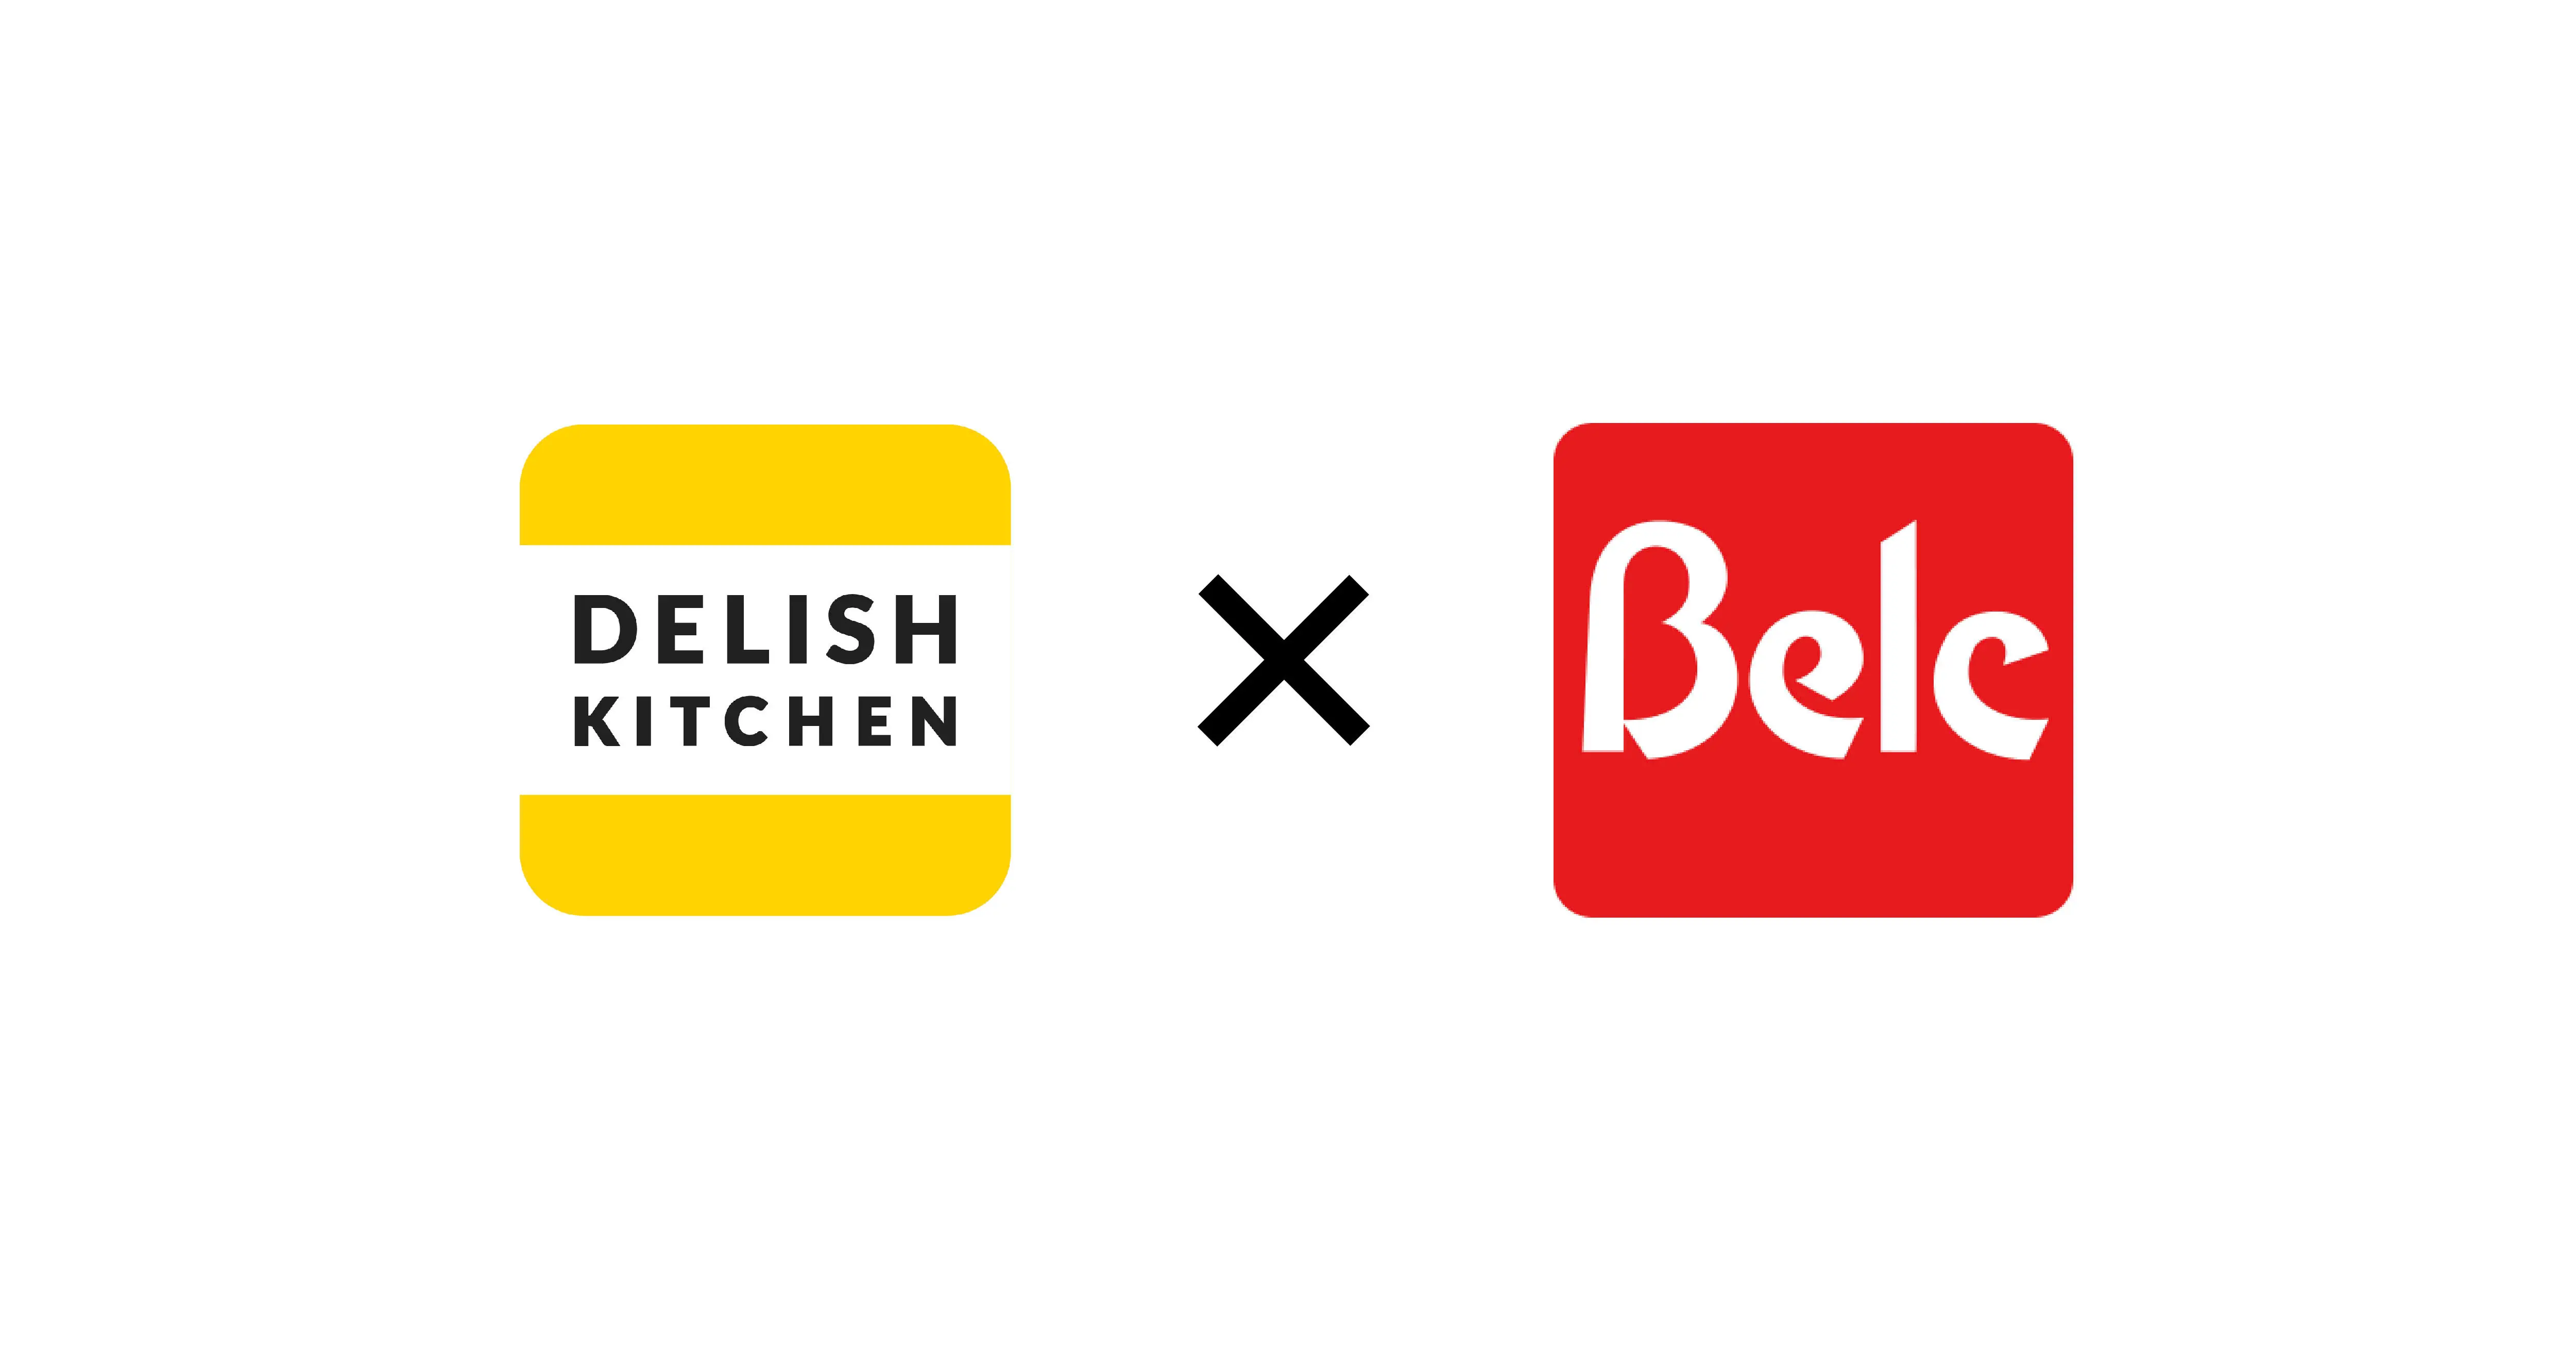 『DELISH KITCHEN Retail Support Program』、関東地方で122店舗を展開する『ベルク』と本格提携開始。総合的なサービス連携でユーザーへのレシピ提案をオンライン・オフライン両面で展開